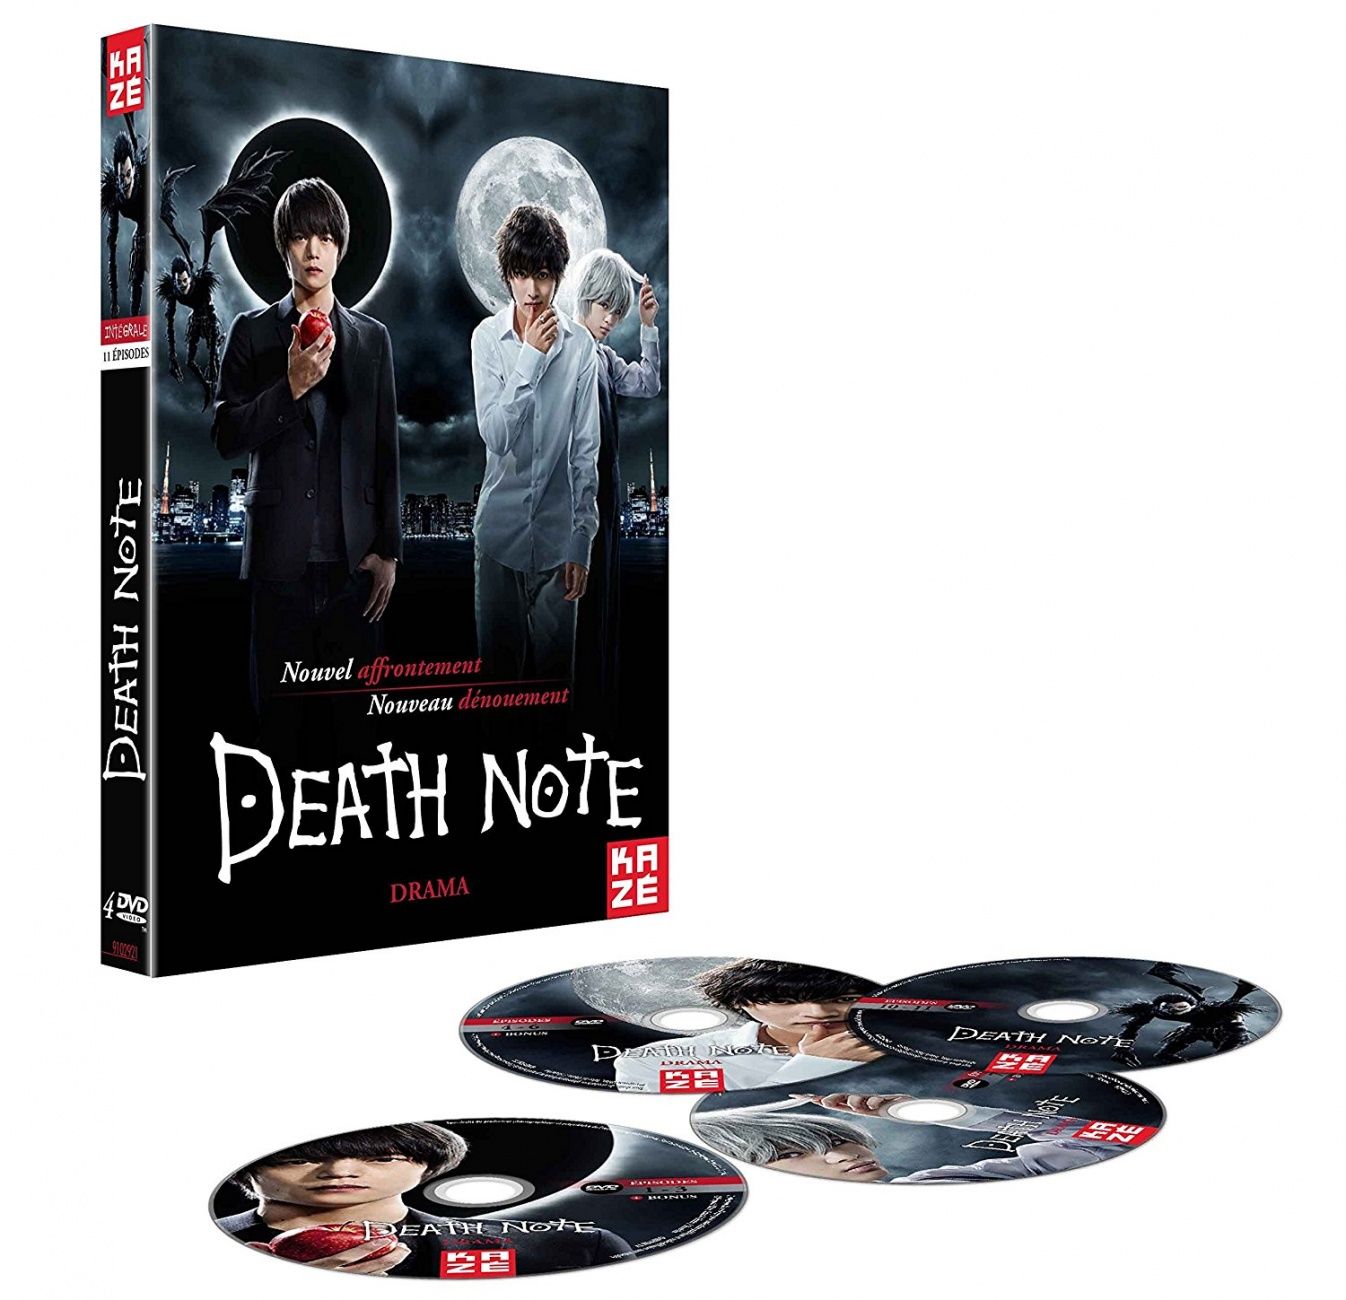 DVD - DEATH NOTE DRAMA - INTEGRALE